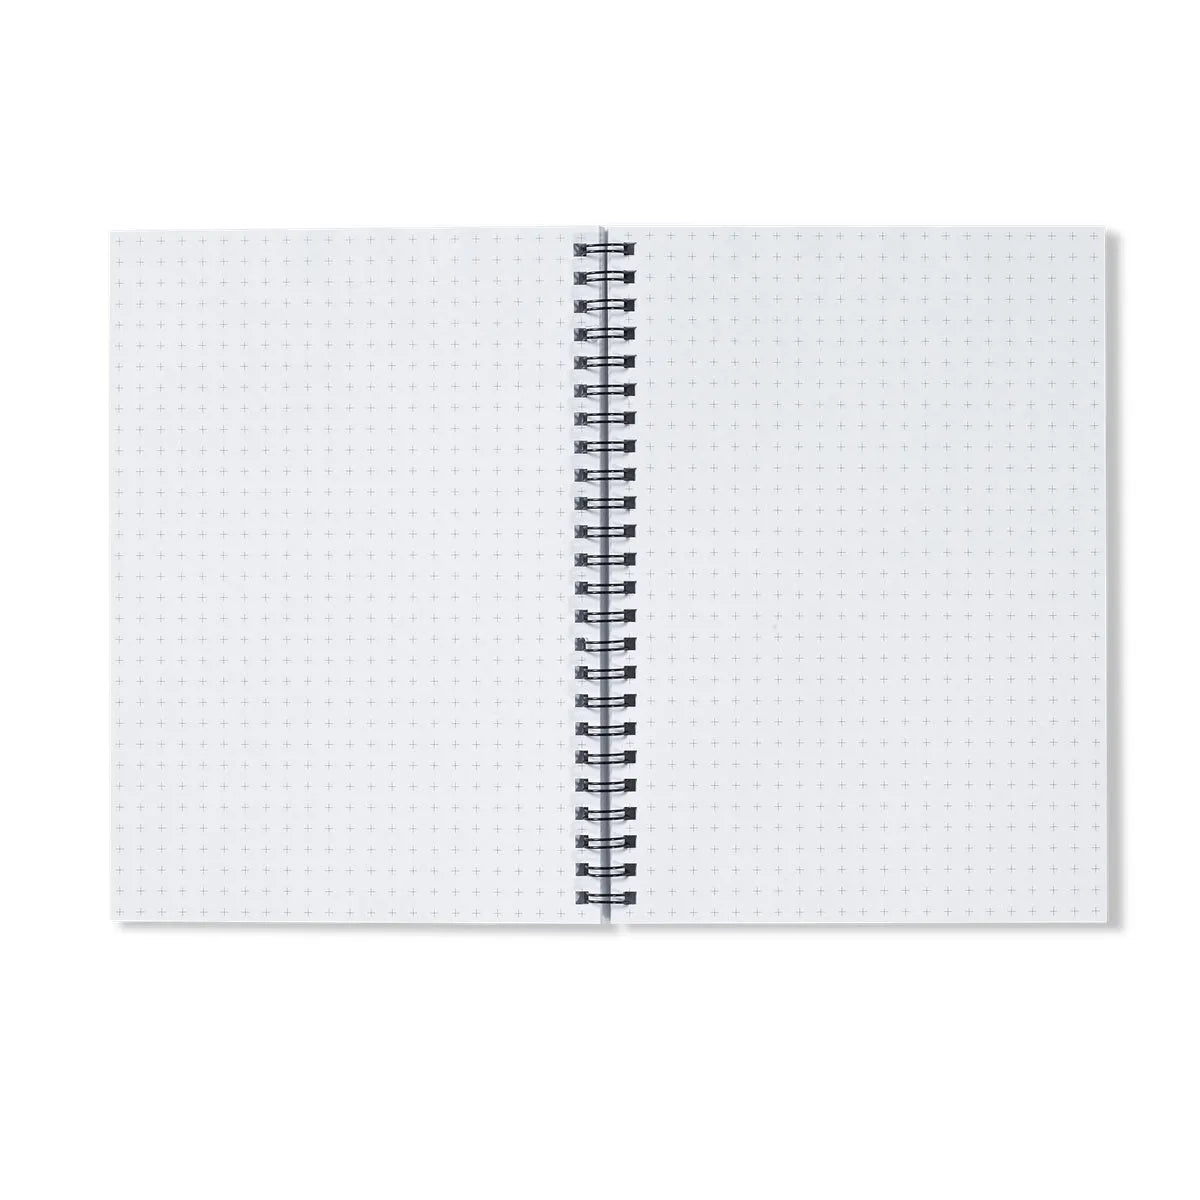 Monkey Do Too Notebook - Notebooks & Notepads - Aesthetic Art